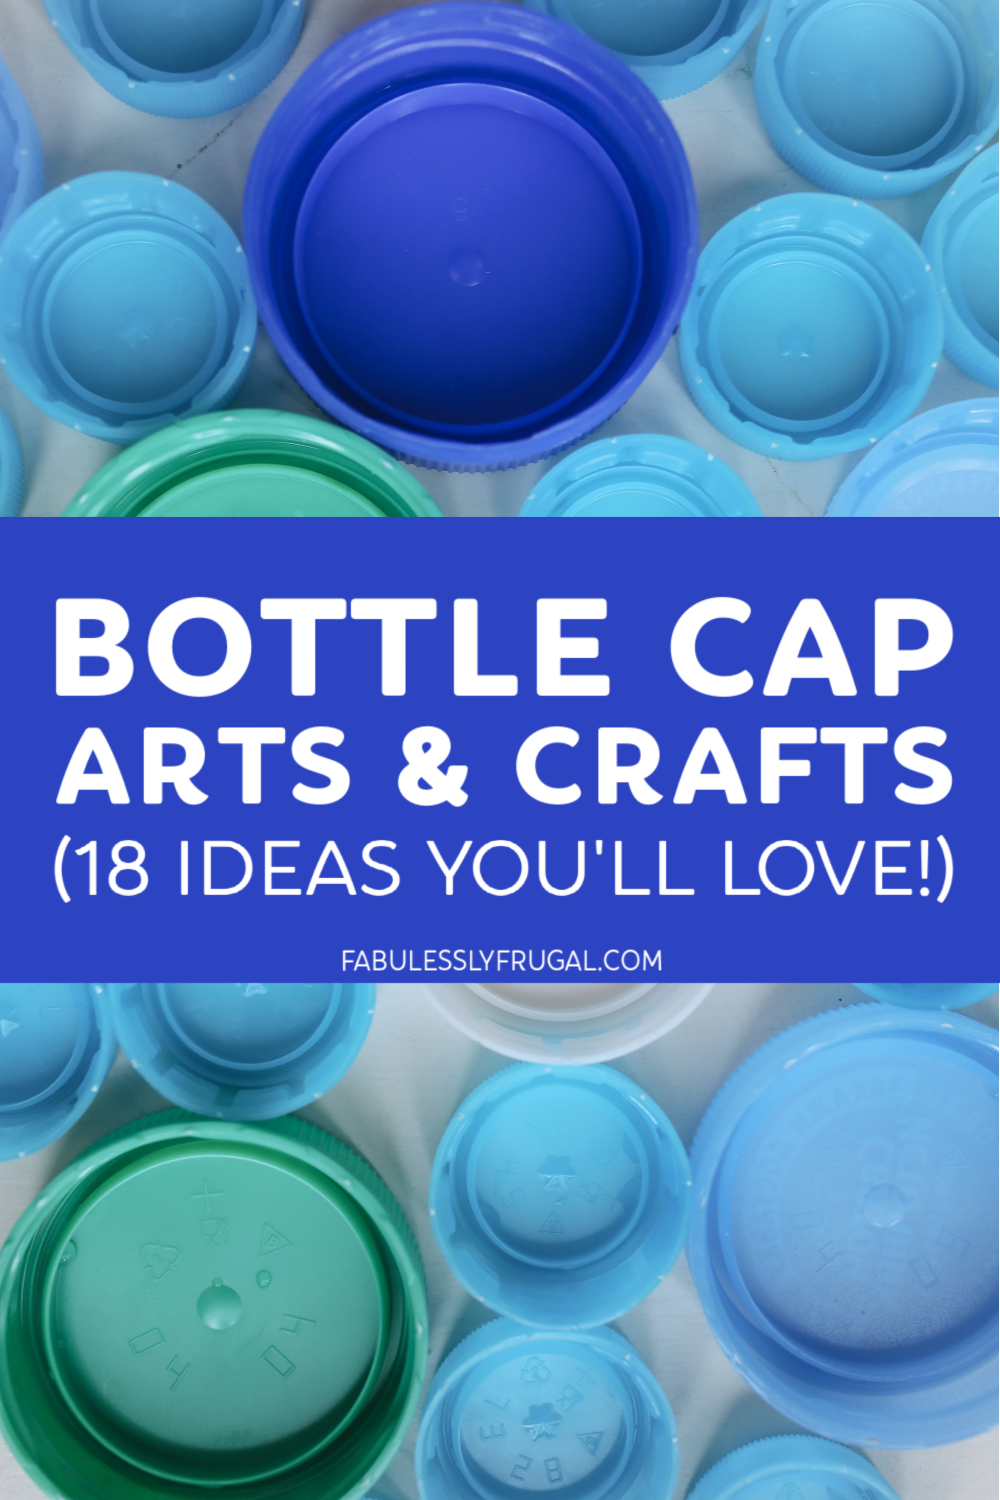 Bottle cap art